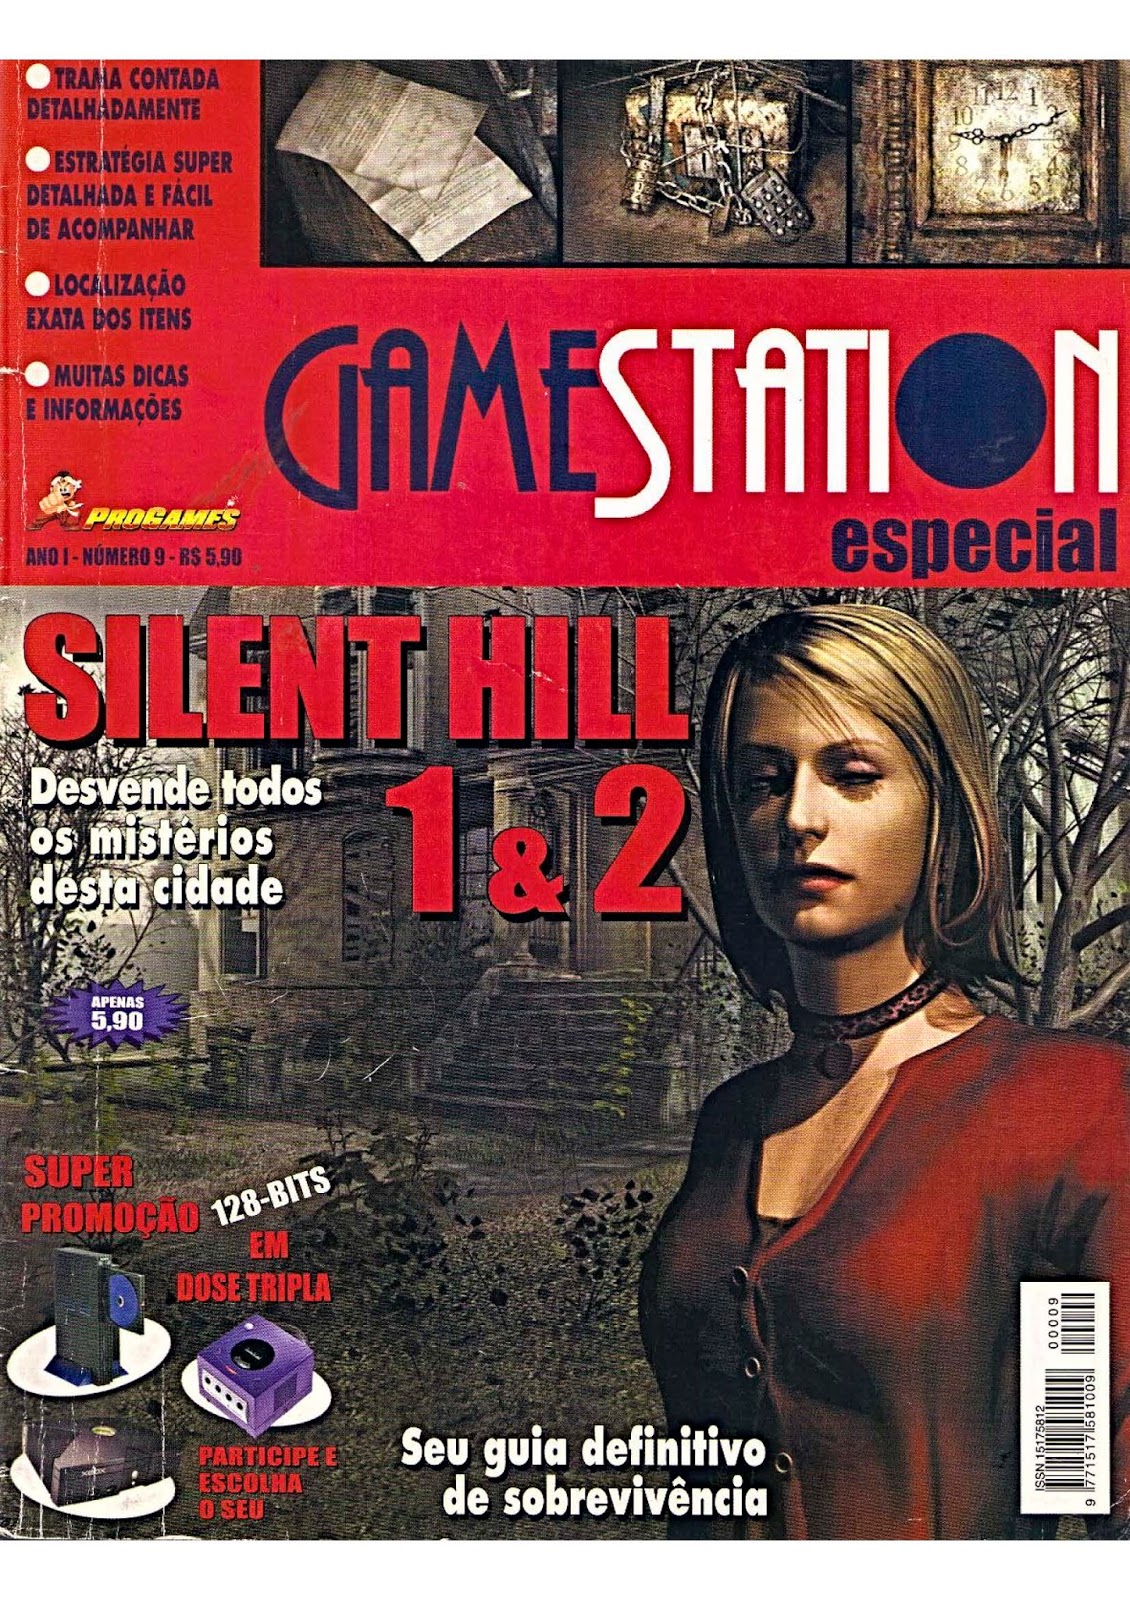 Thedetonadobay Detonado Silent Hill 1 E 2 Gamestation